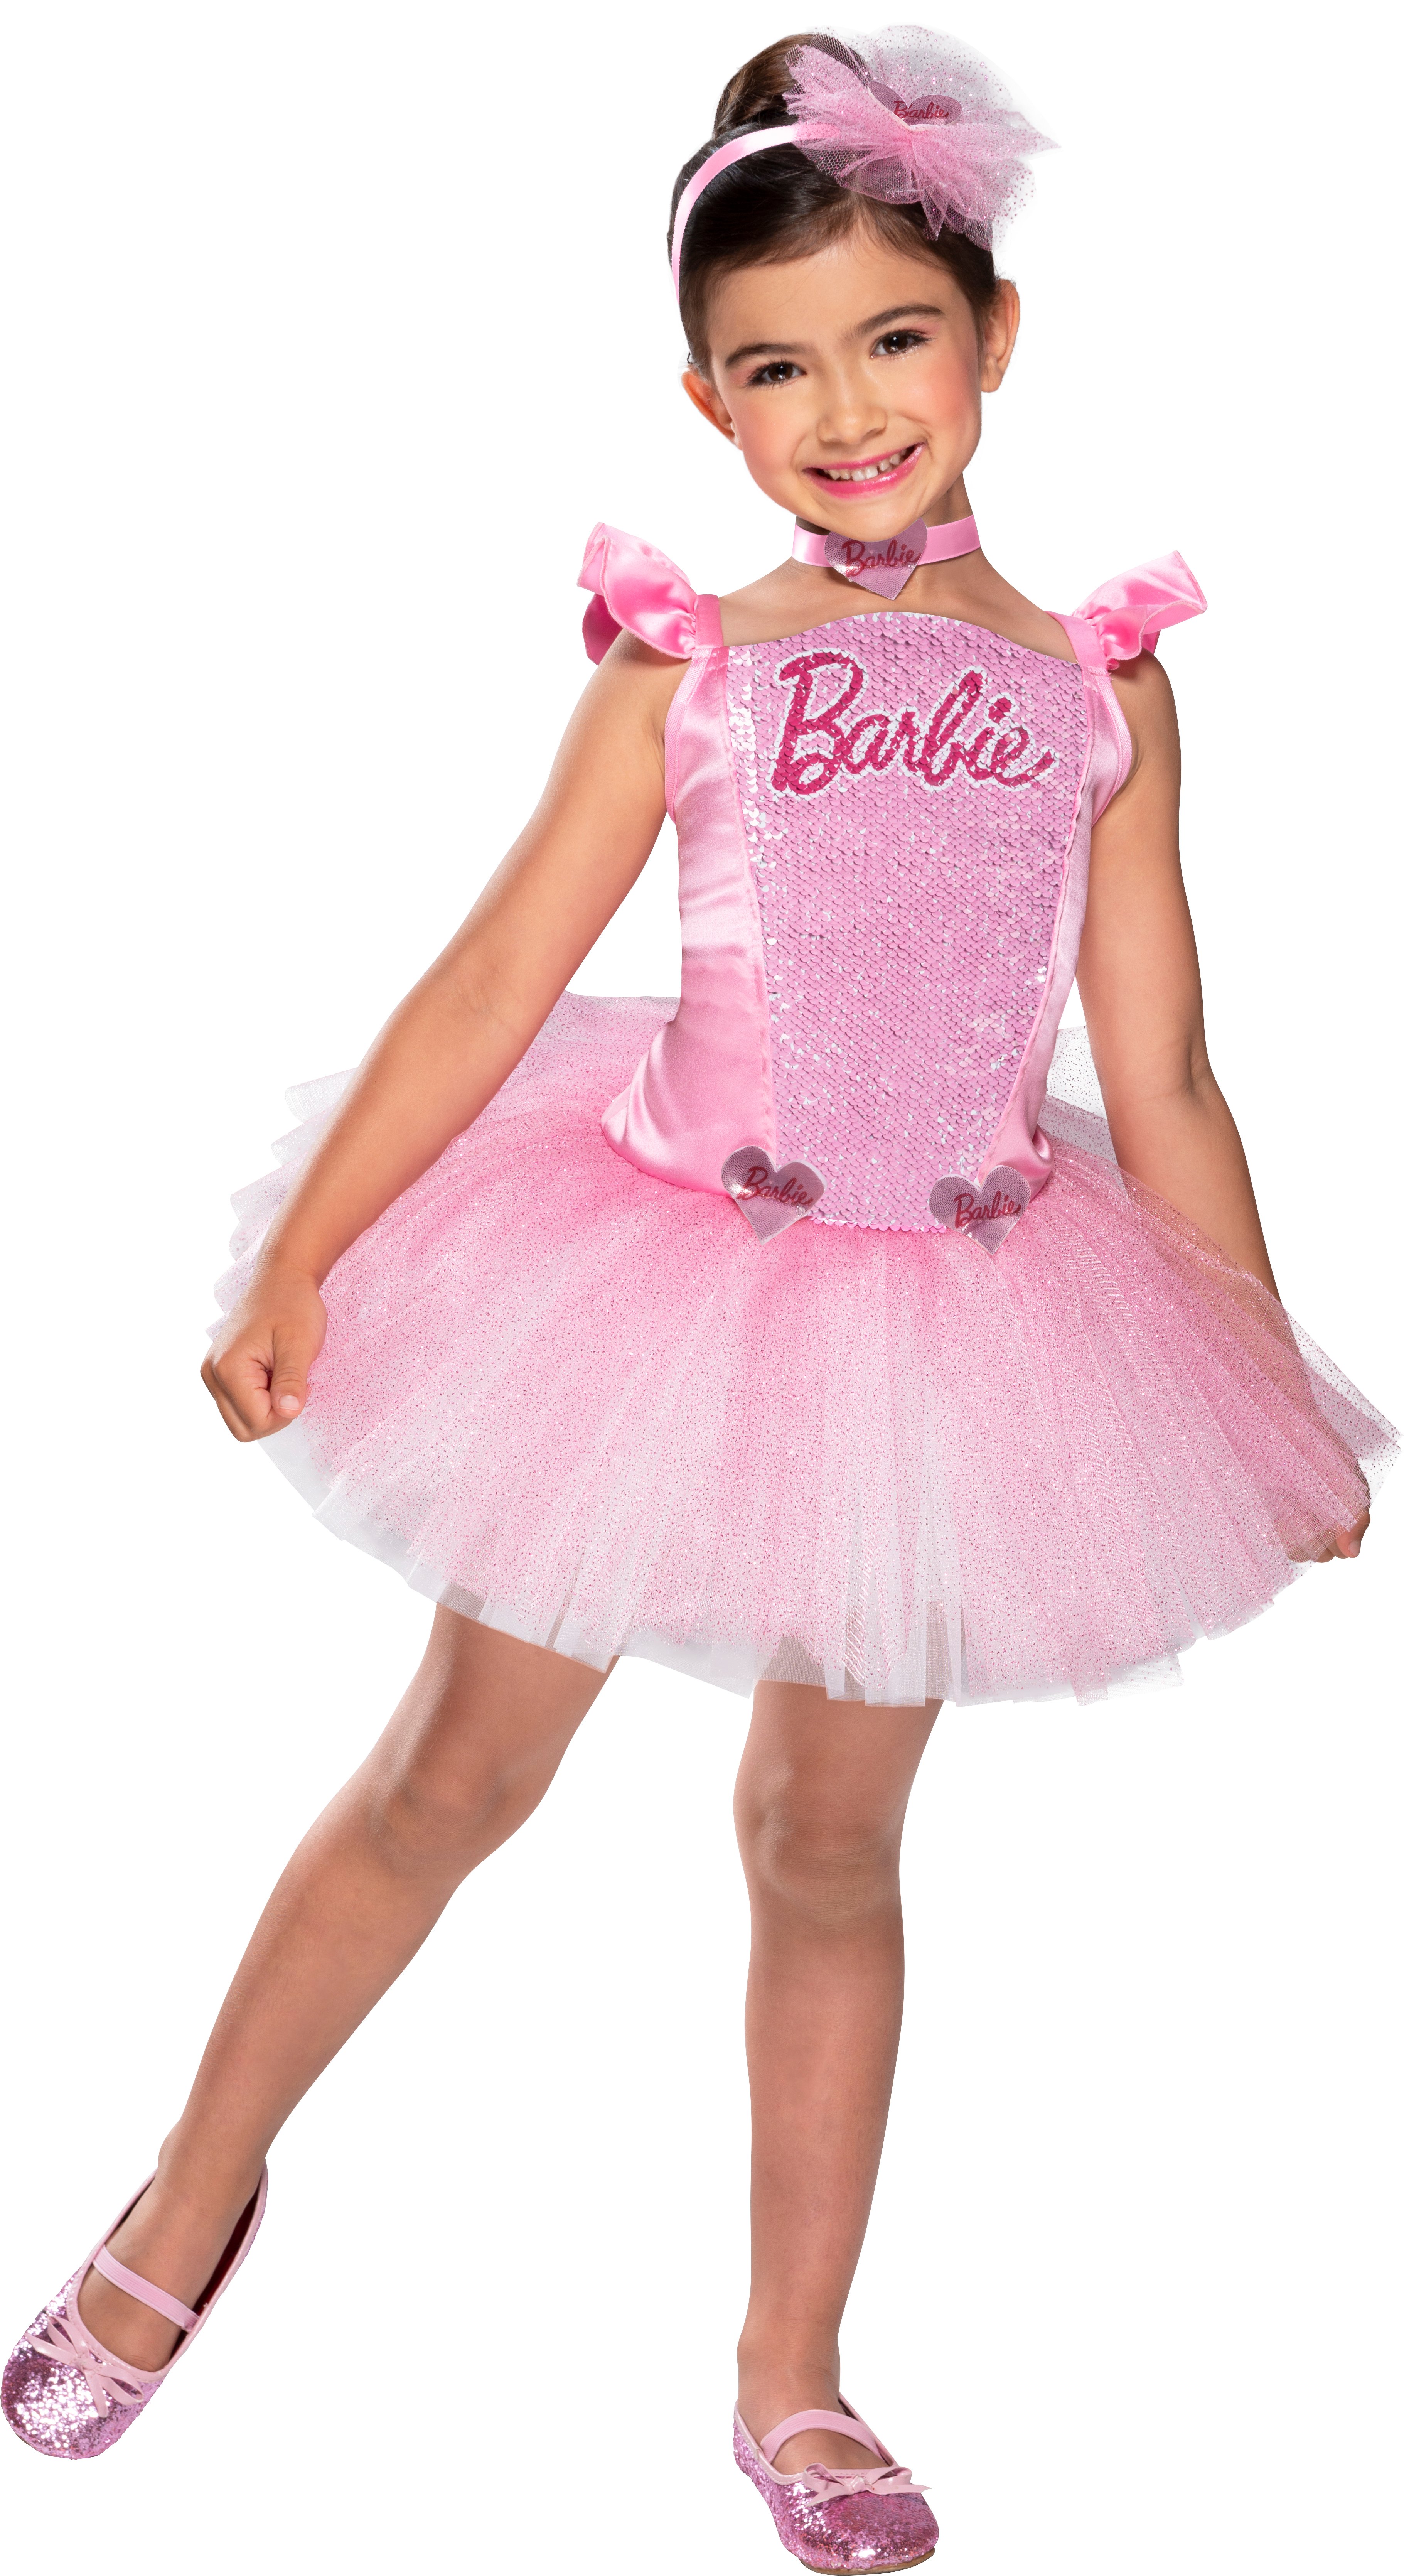 Rubies - Costume - Barbie Ballerina (104 cm) - Leker